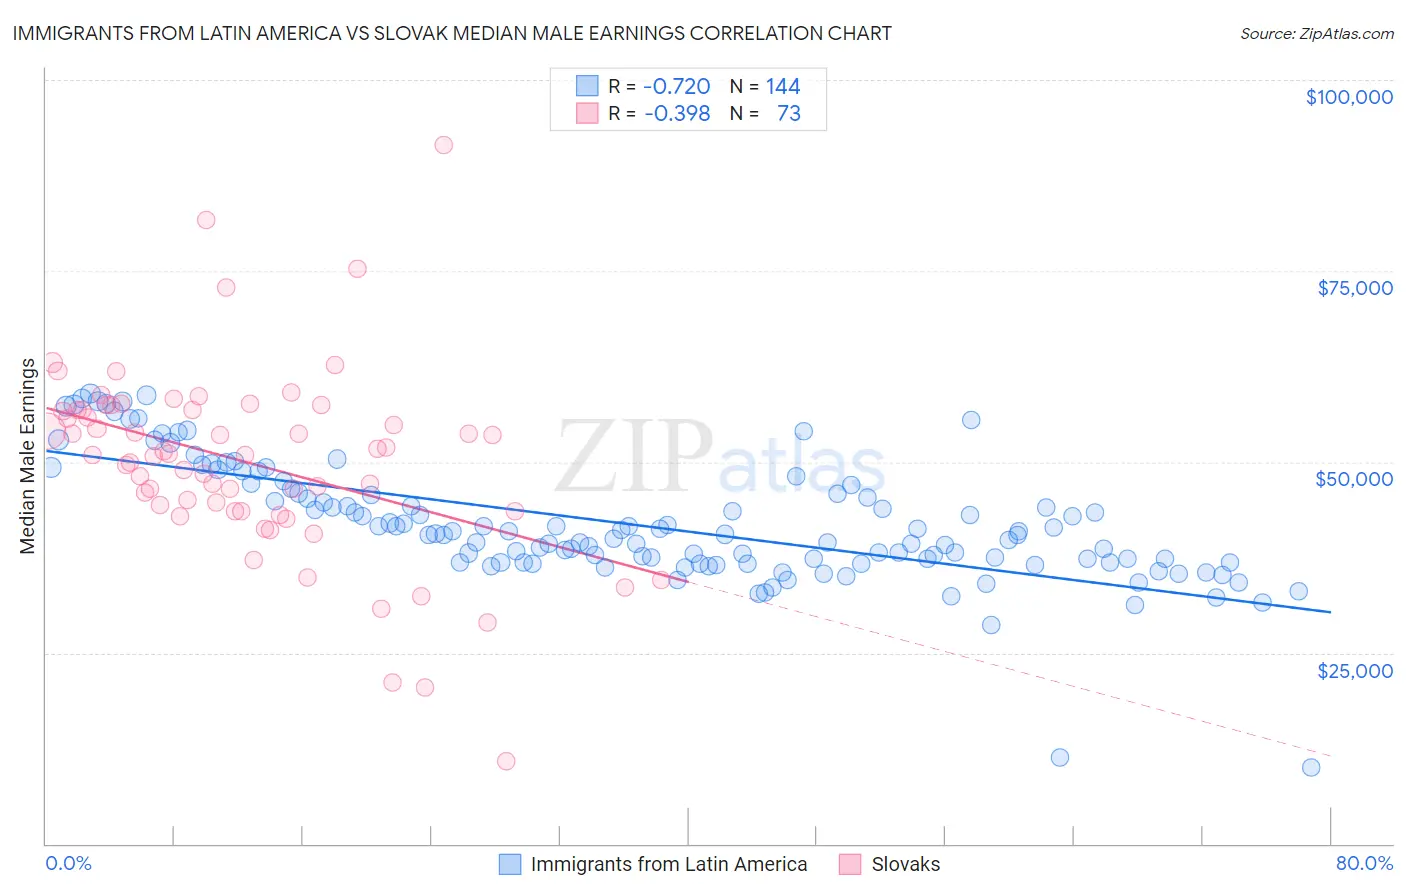 Immigrants from Latin America vs Slovak Median Male Earnings